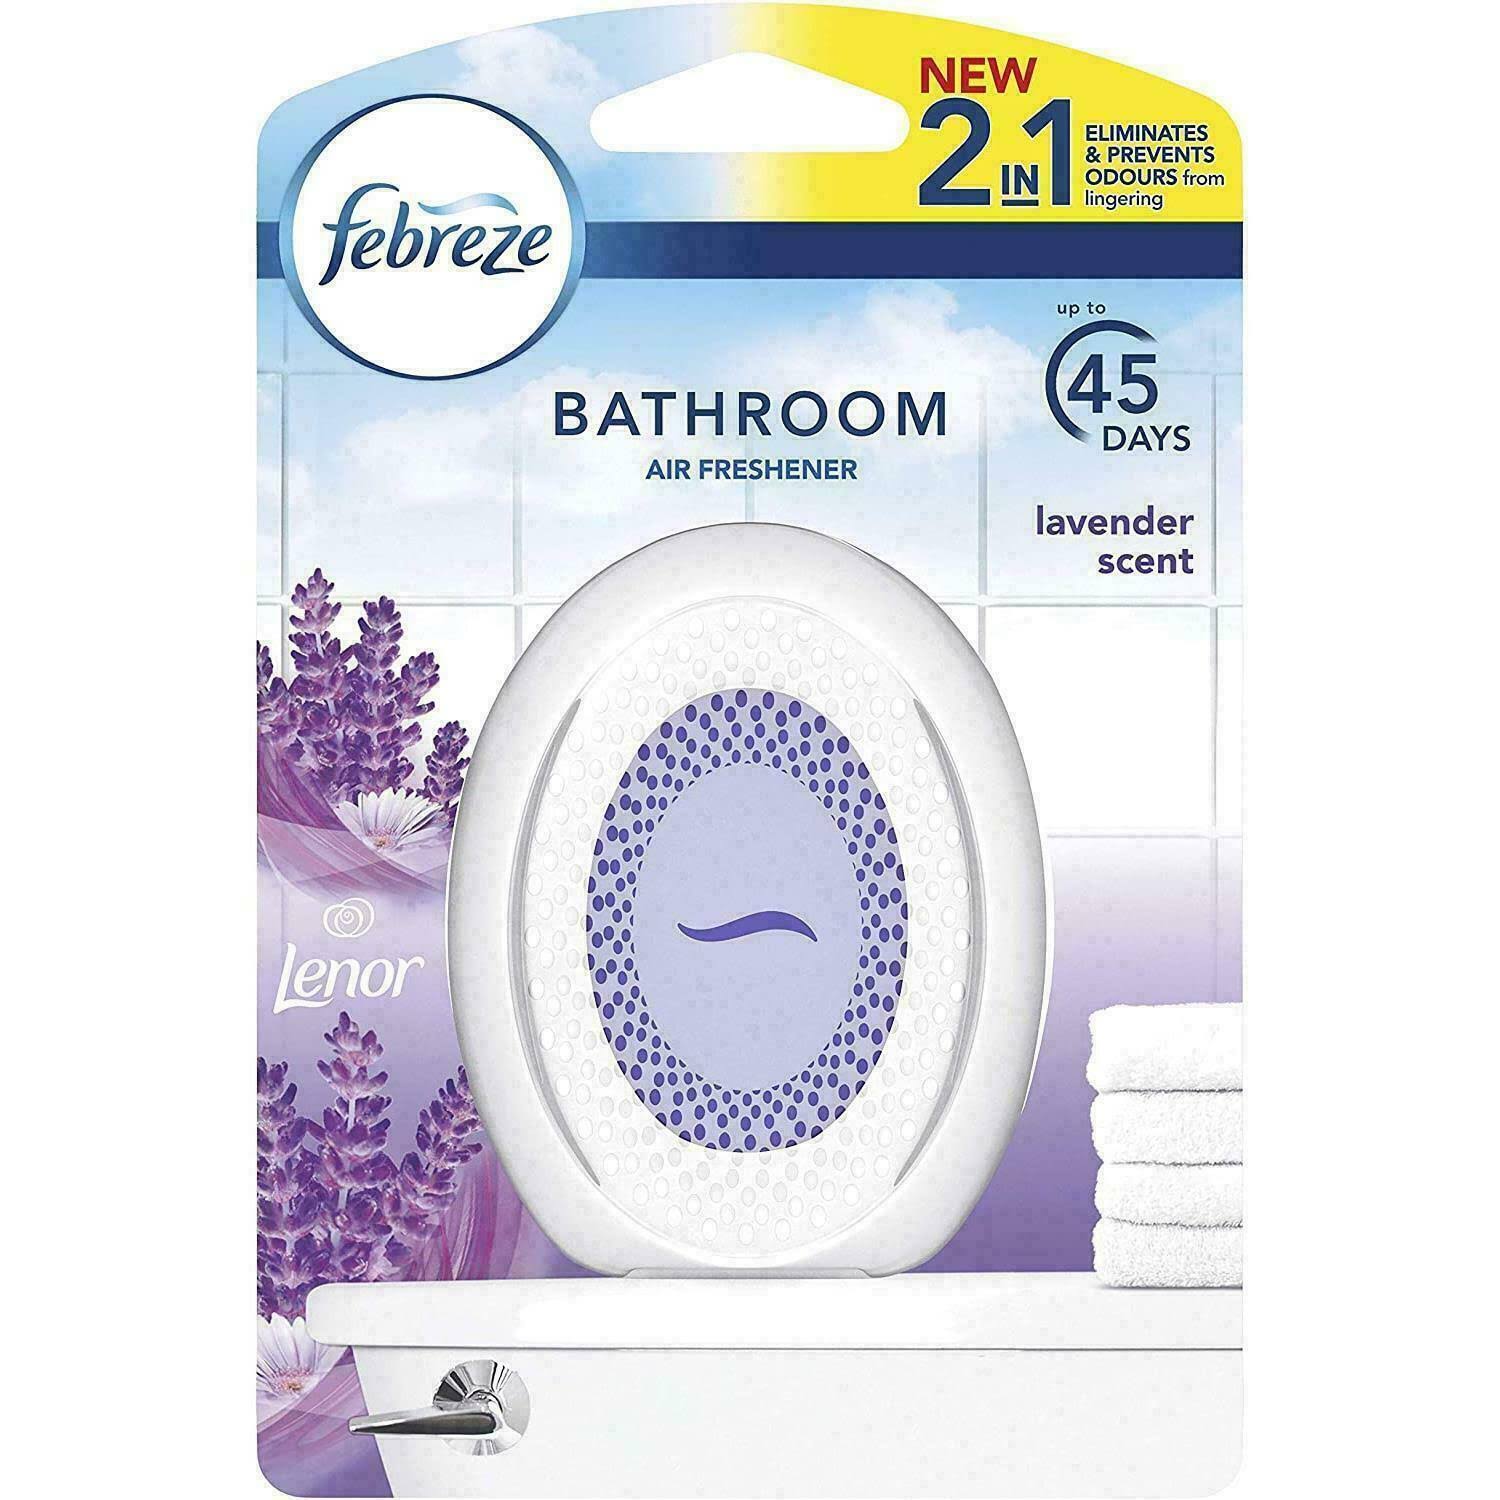 Febreze Bathroom Air Freshener 7.2g - Lasts Up To 45 Days, Fresh Scent, Lavender